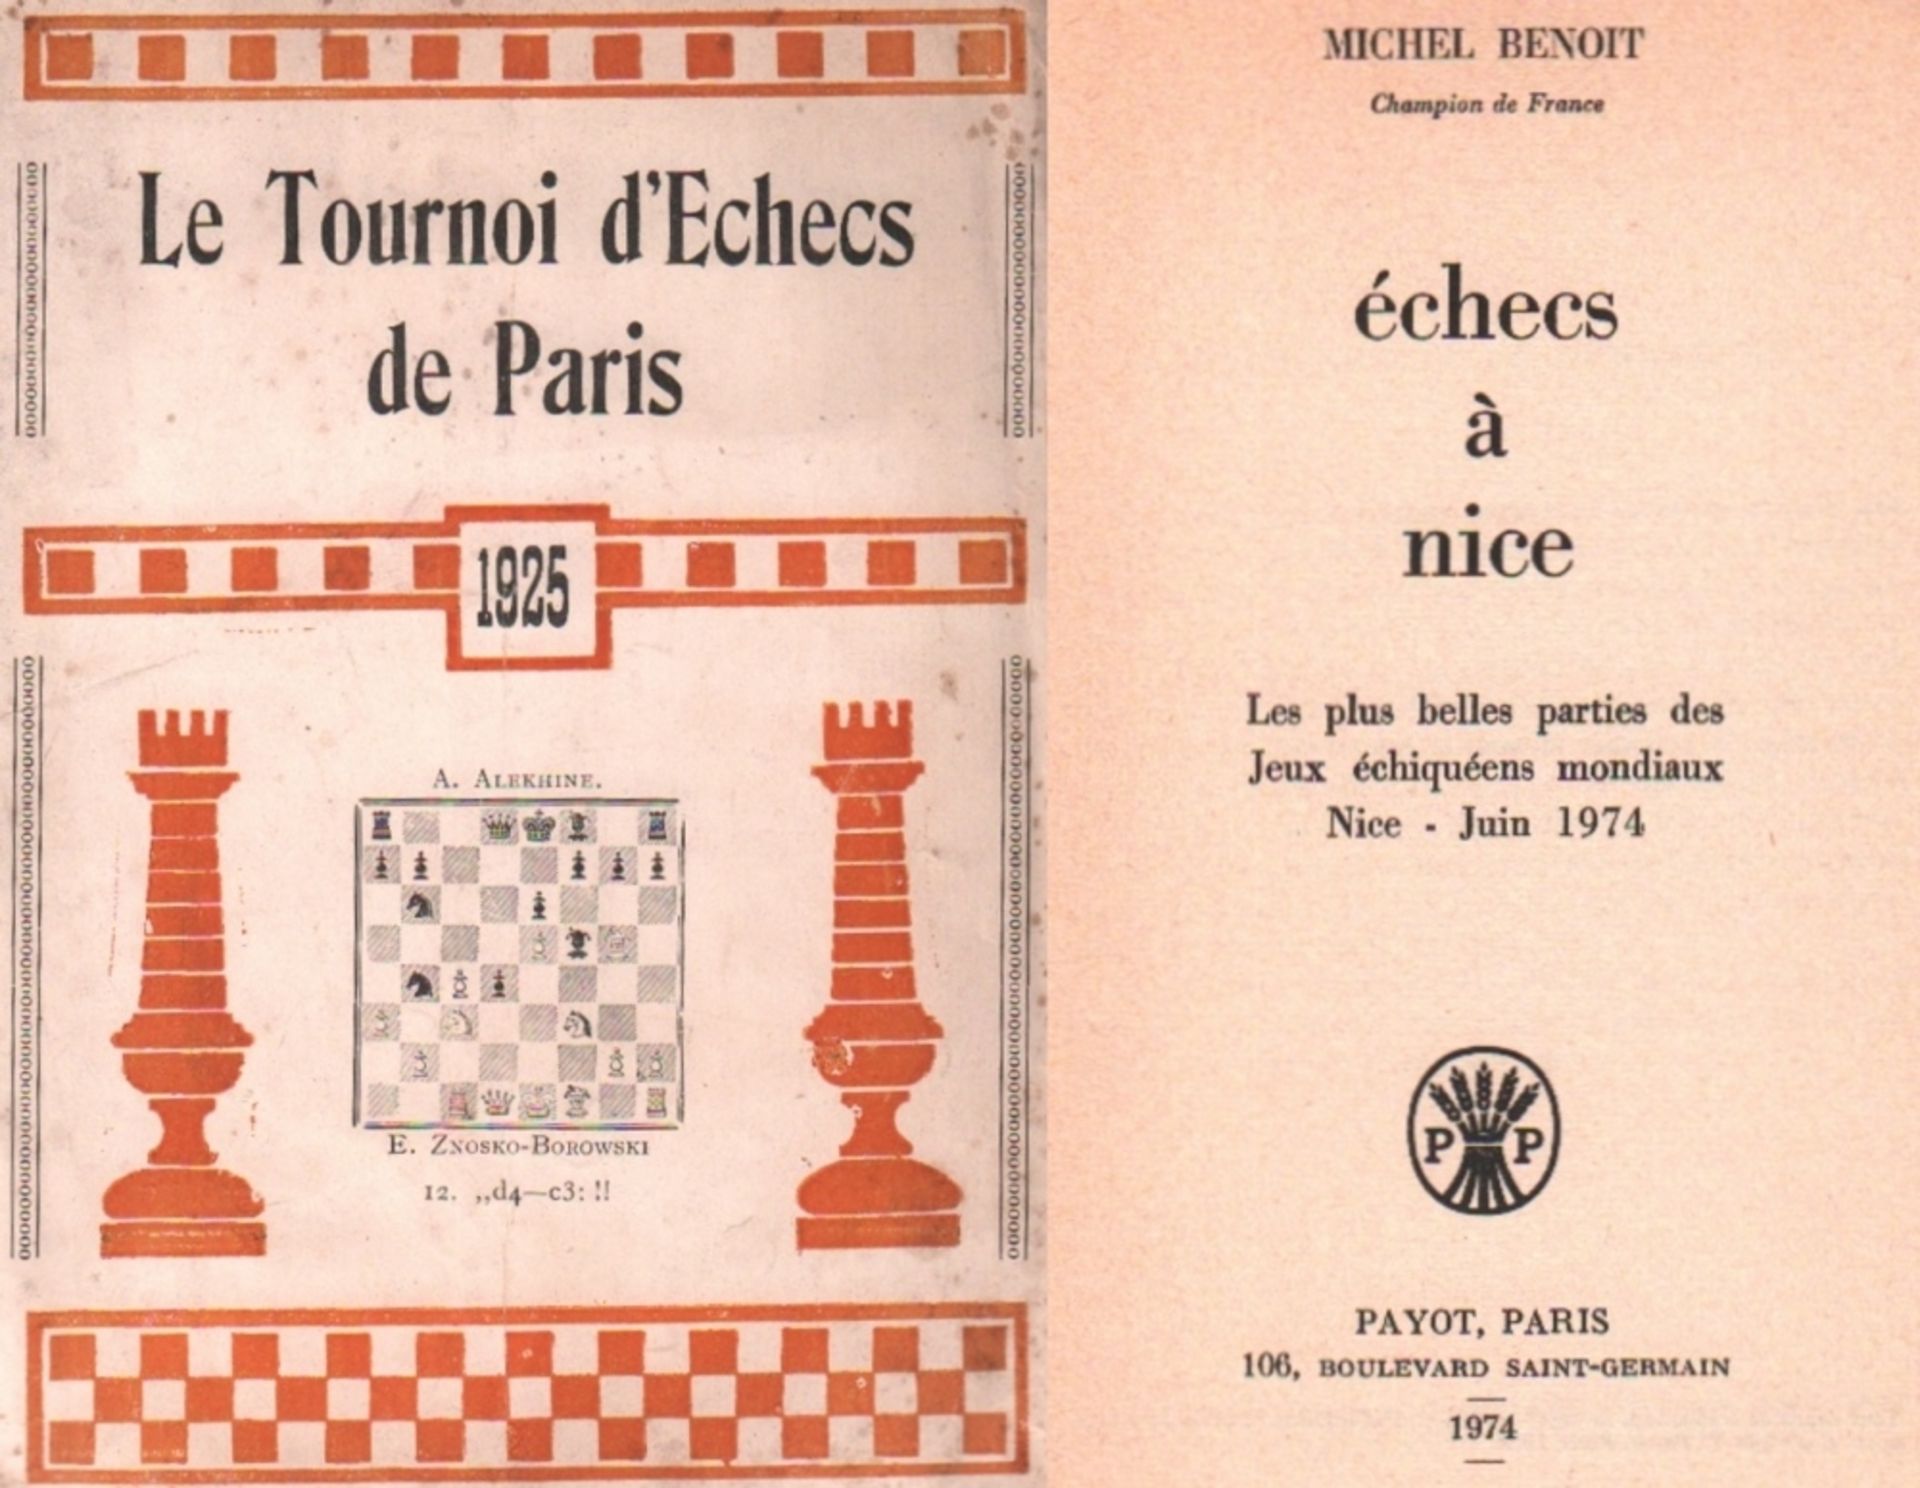 Paris 1925. [Tartakower, S. G. und E. Znosko - Borovsky.] Le Tournoi d'Echecs de Paris. Recueil